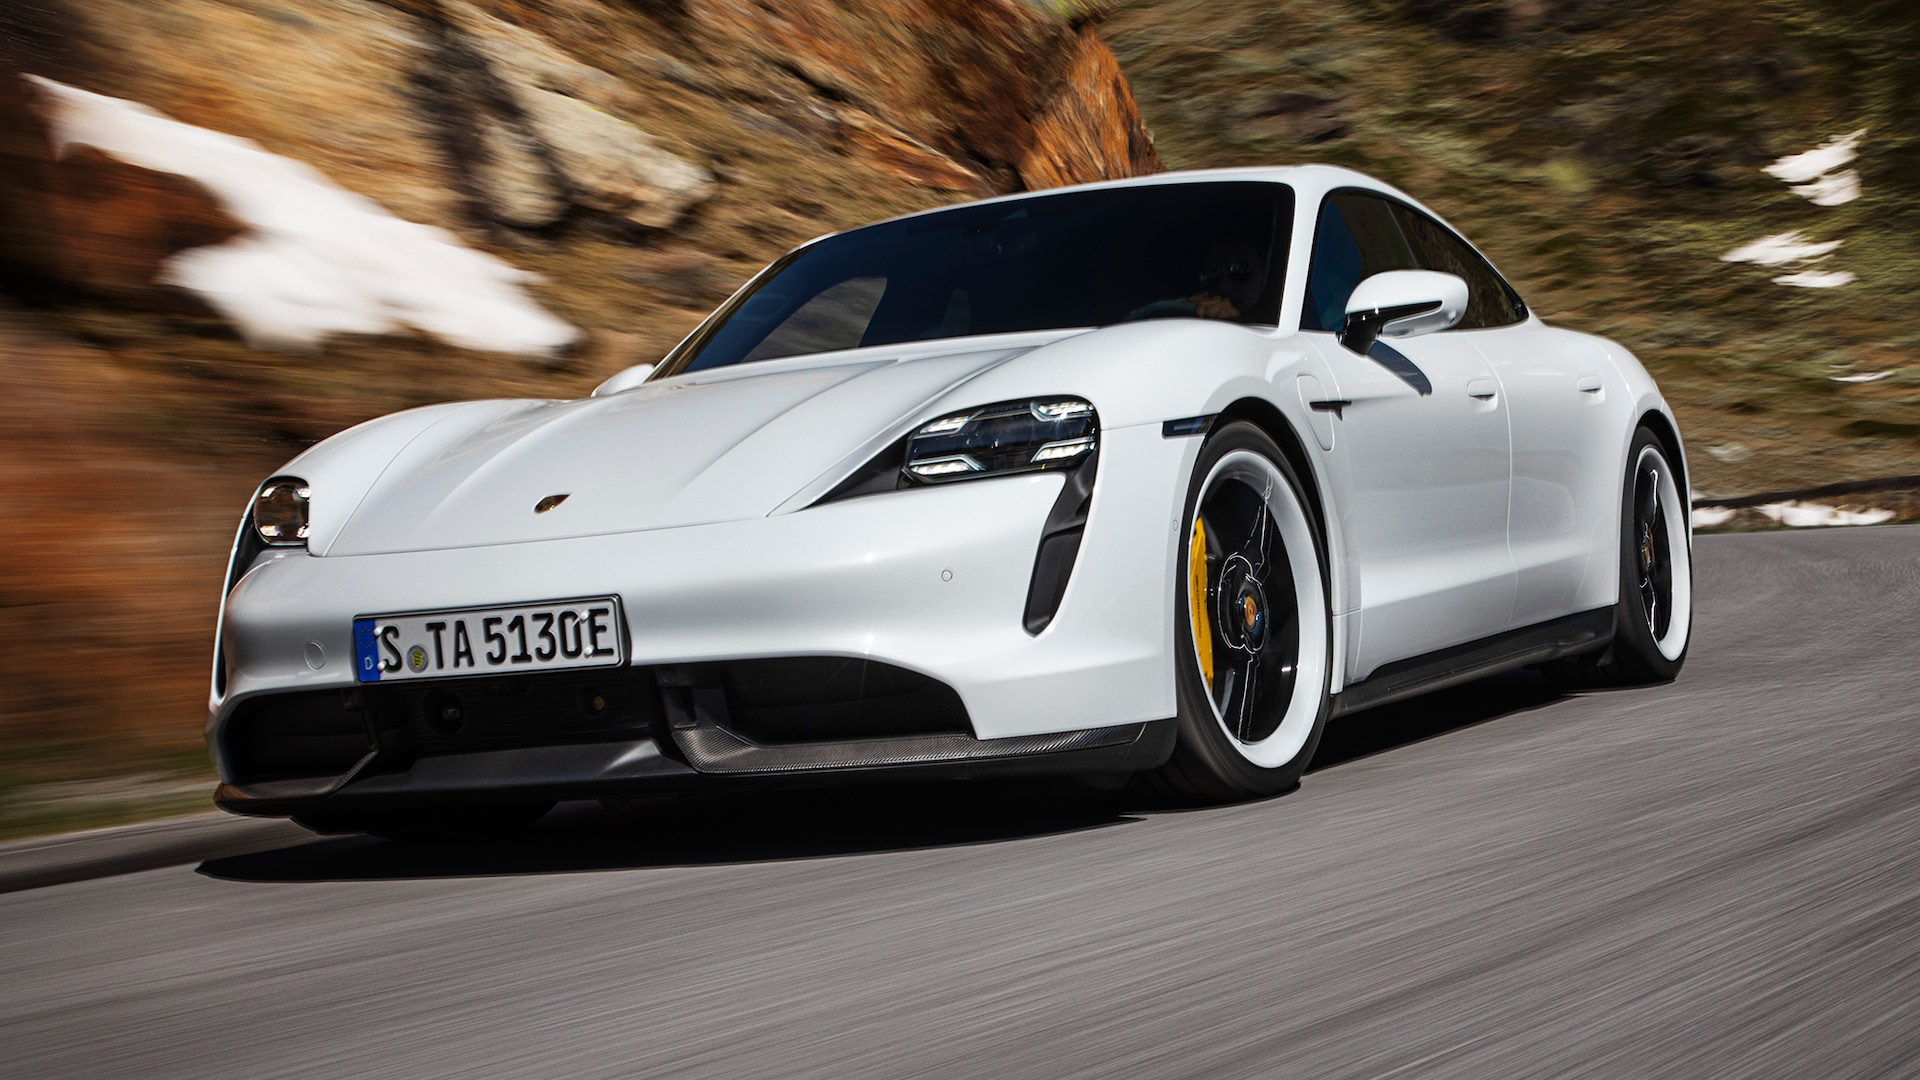 Porsche Taycan Interior, Range, and More: In-Depth on Porsche's Electric Car